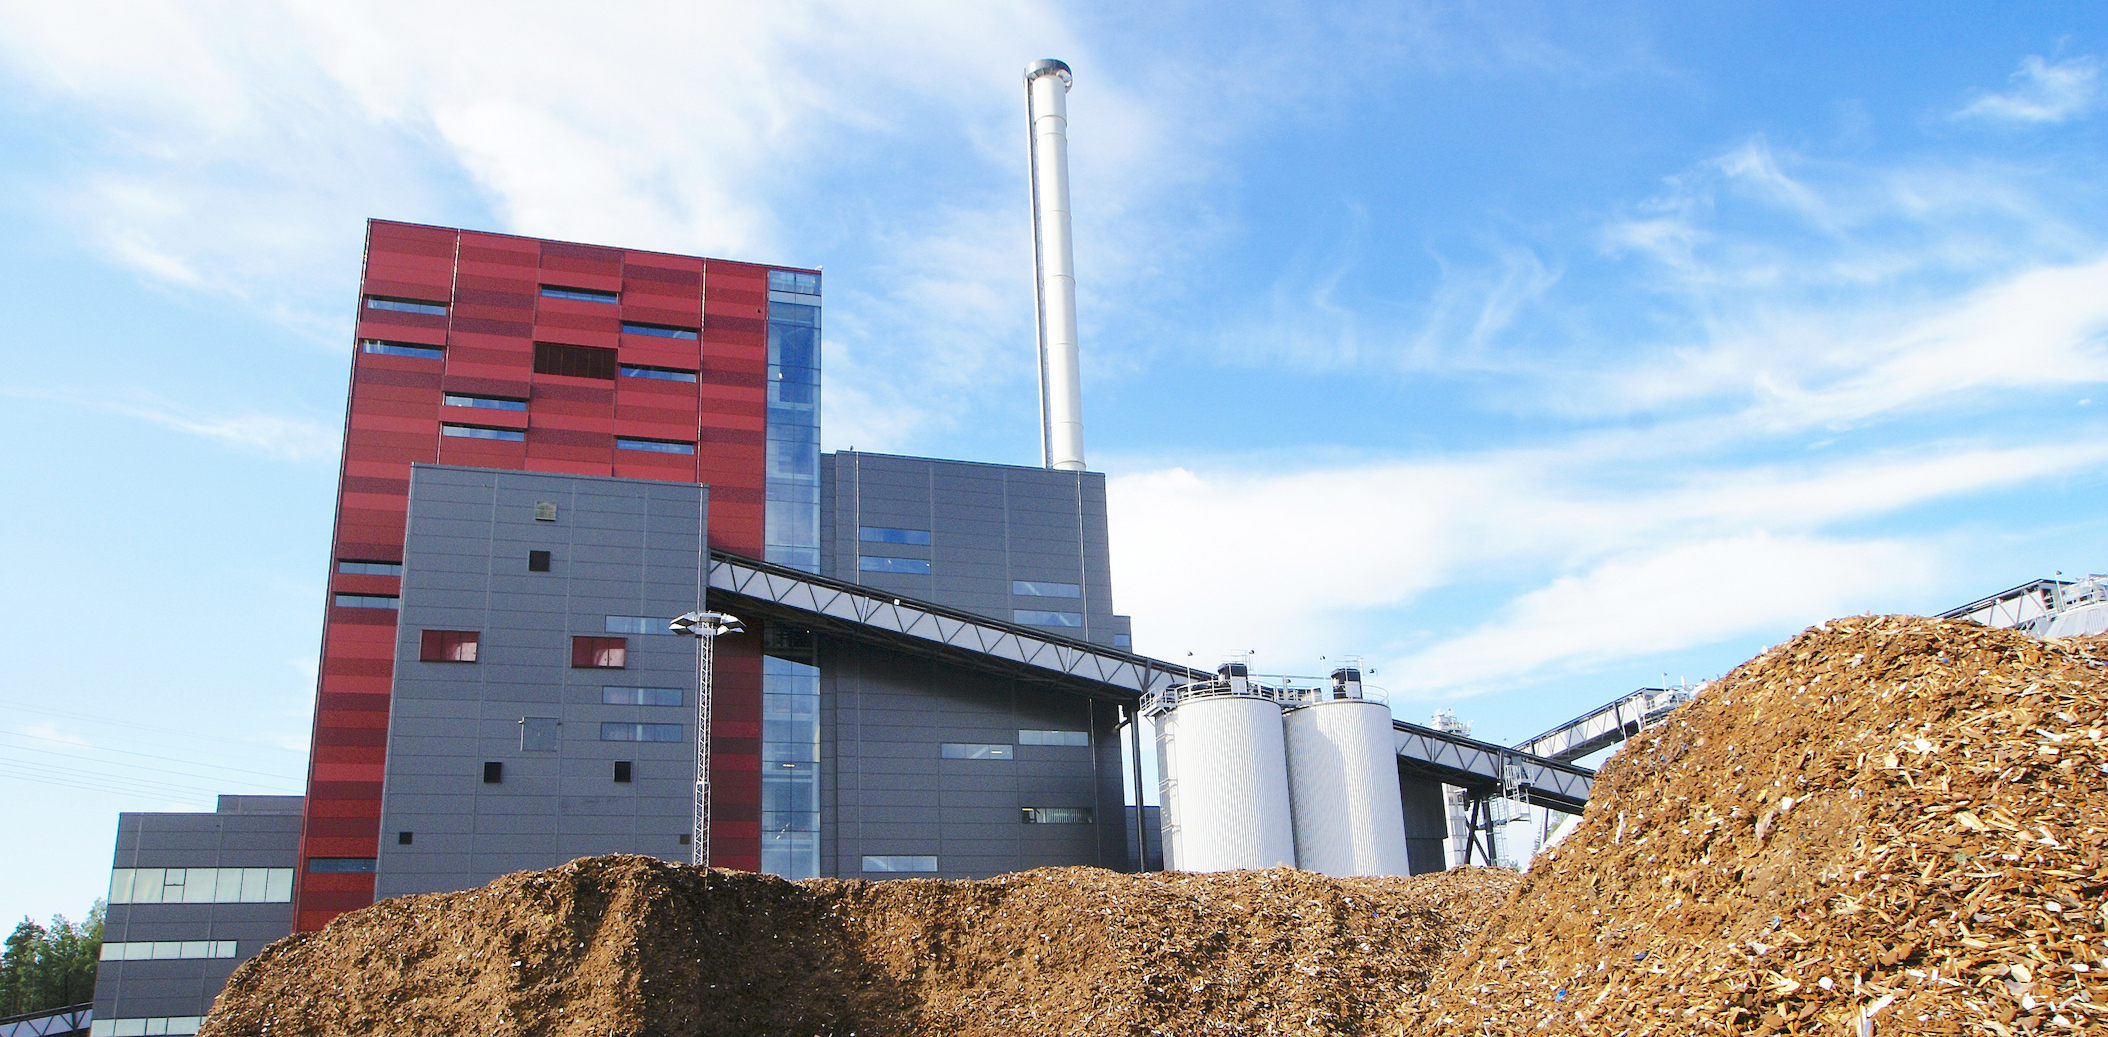 bio power plant with storage of wooden fuel (biomass) 